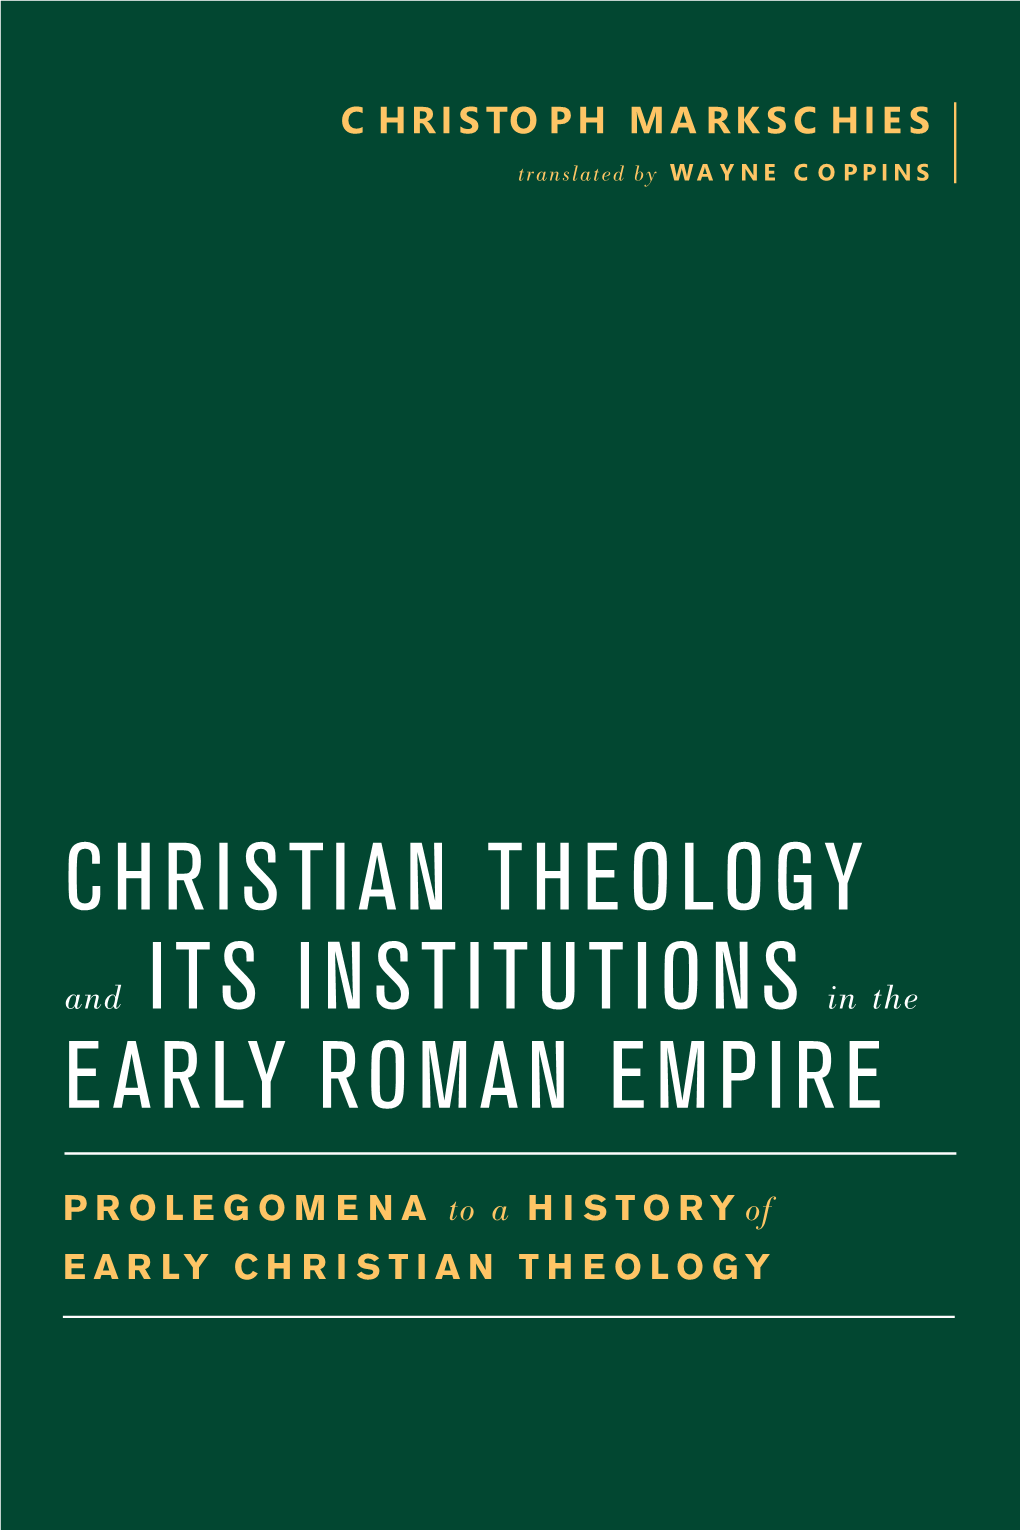 Prolegomena to a History of Early Christian Theology